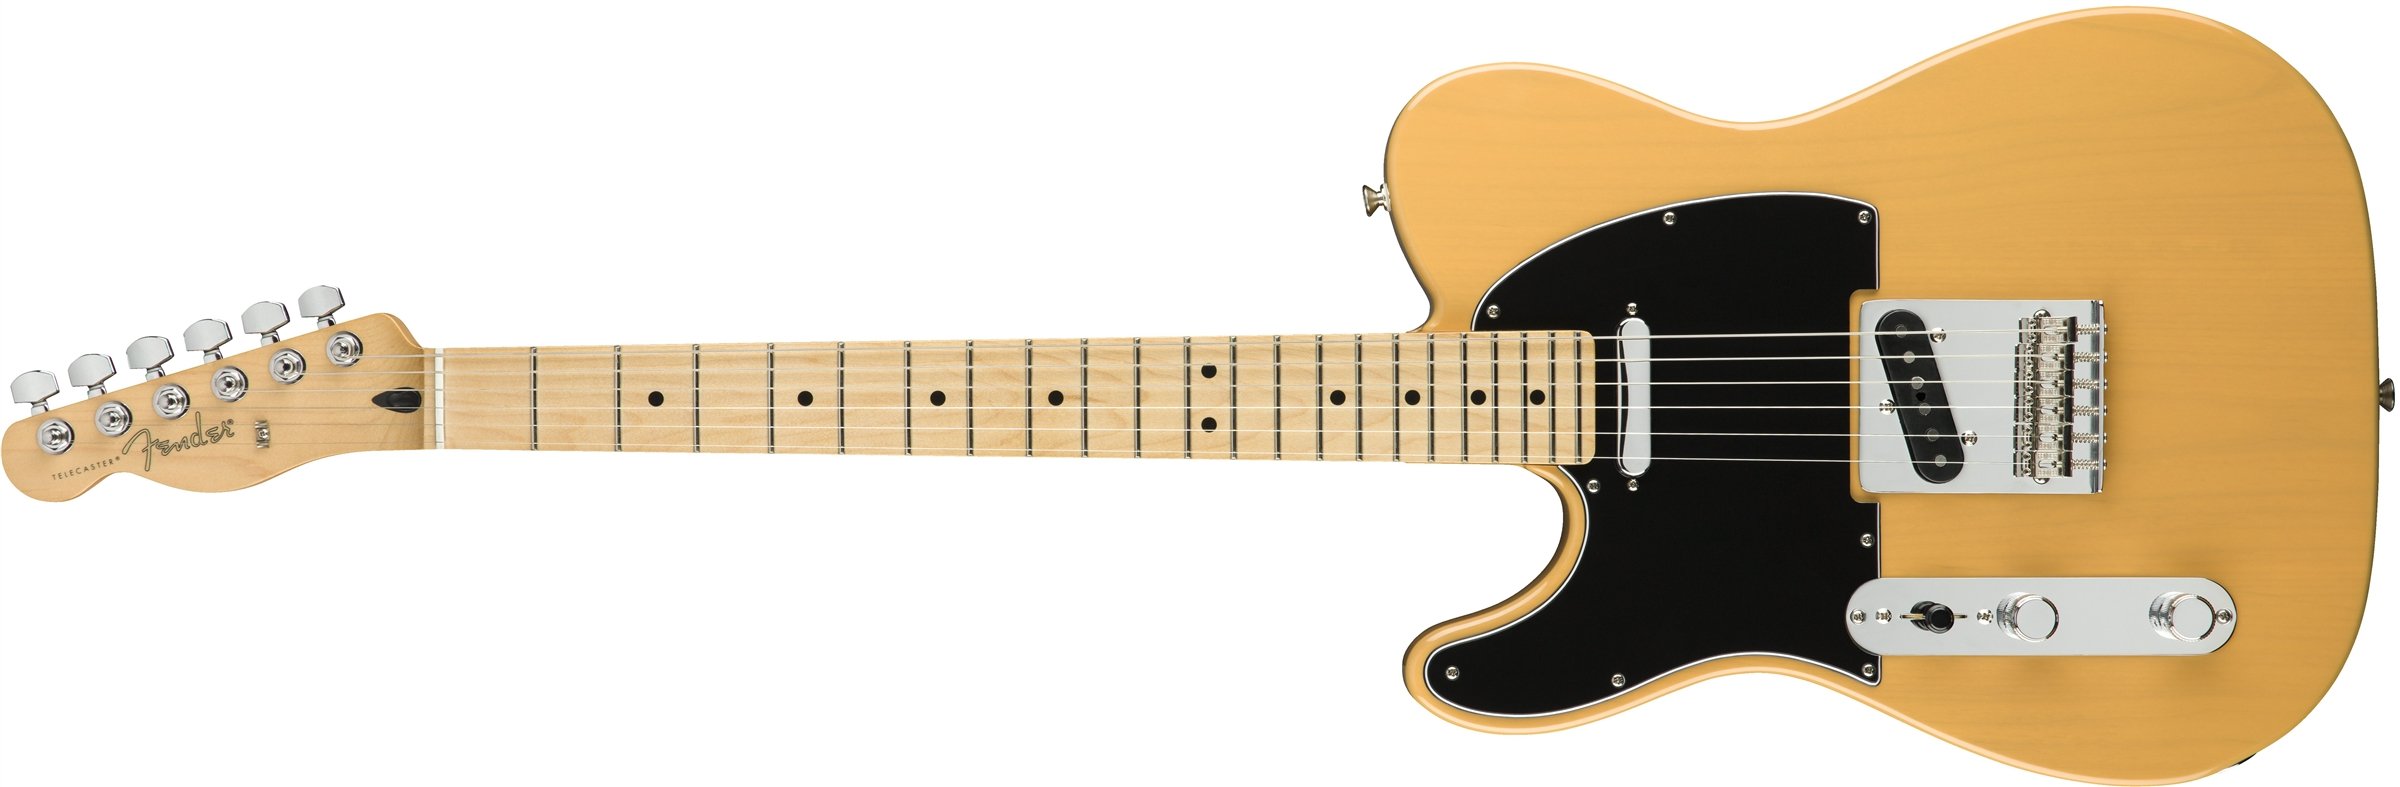 Fender Reproductor de guitarra eléctrica Telecaster